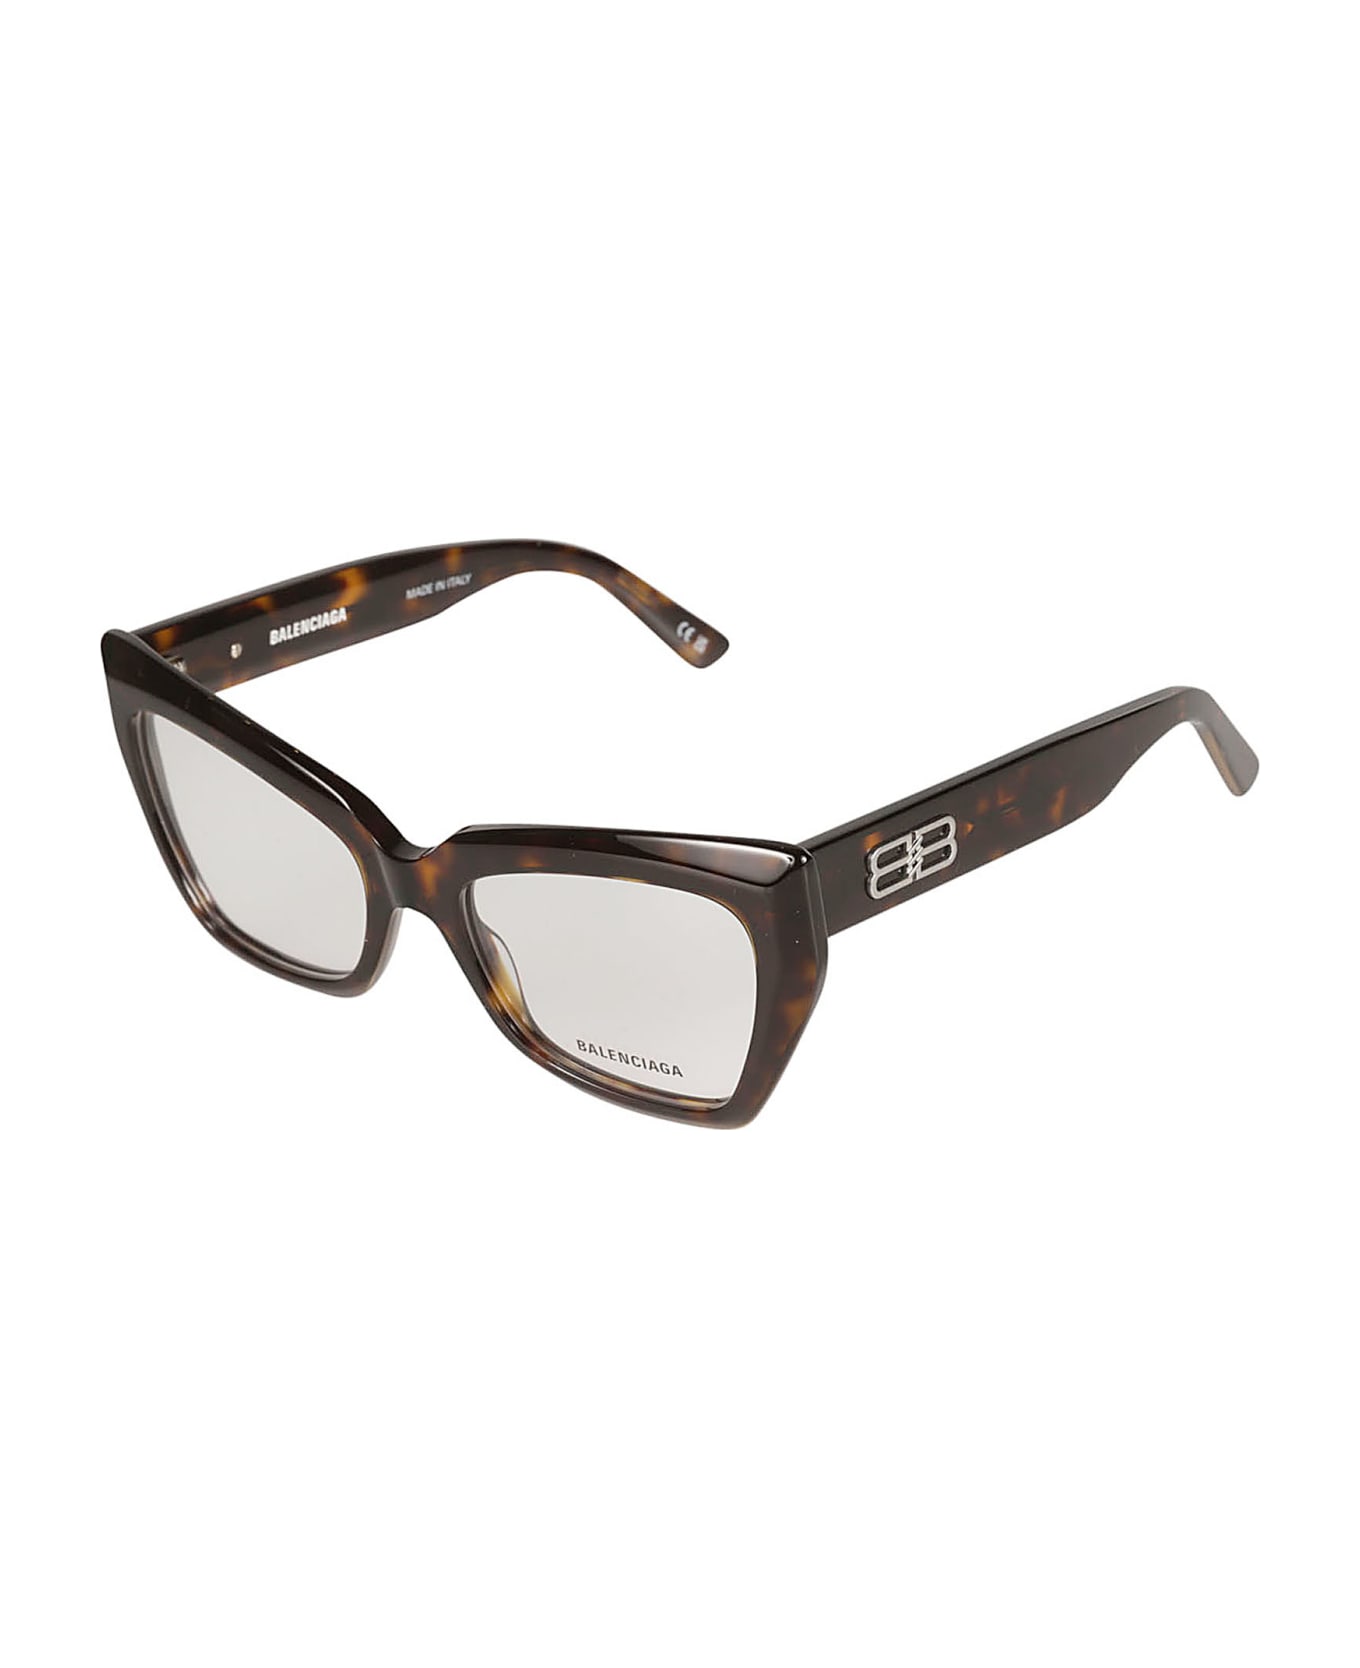 Balenciaga Eyewear Bb Plaque Square Frame Glasses - Havana/Transparent アイウェア